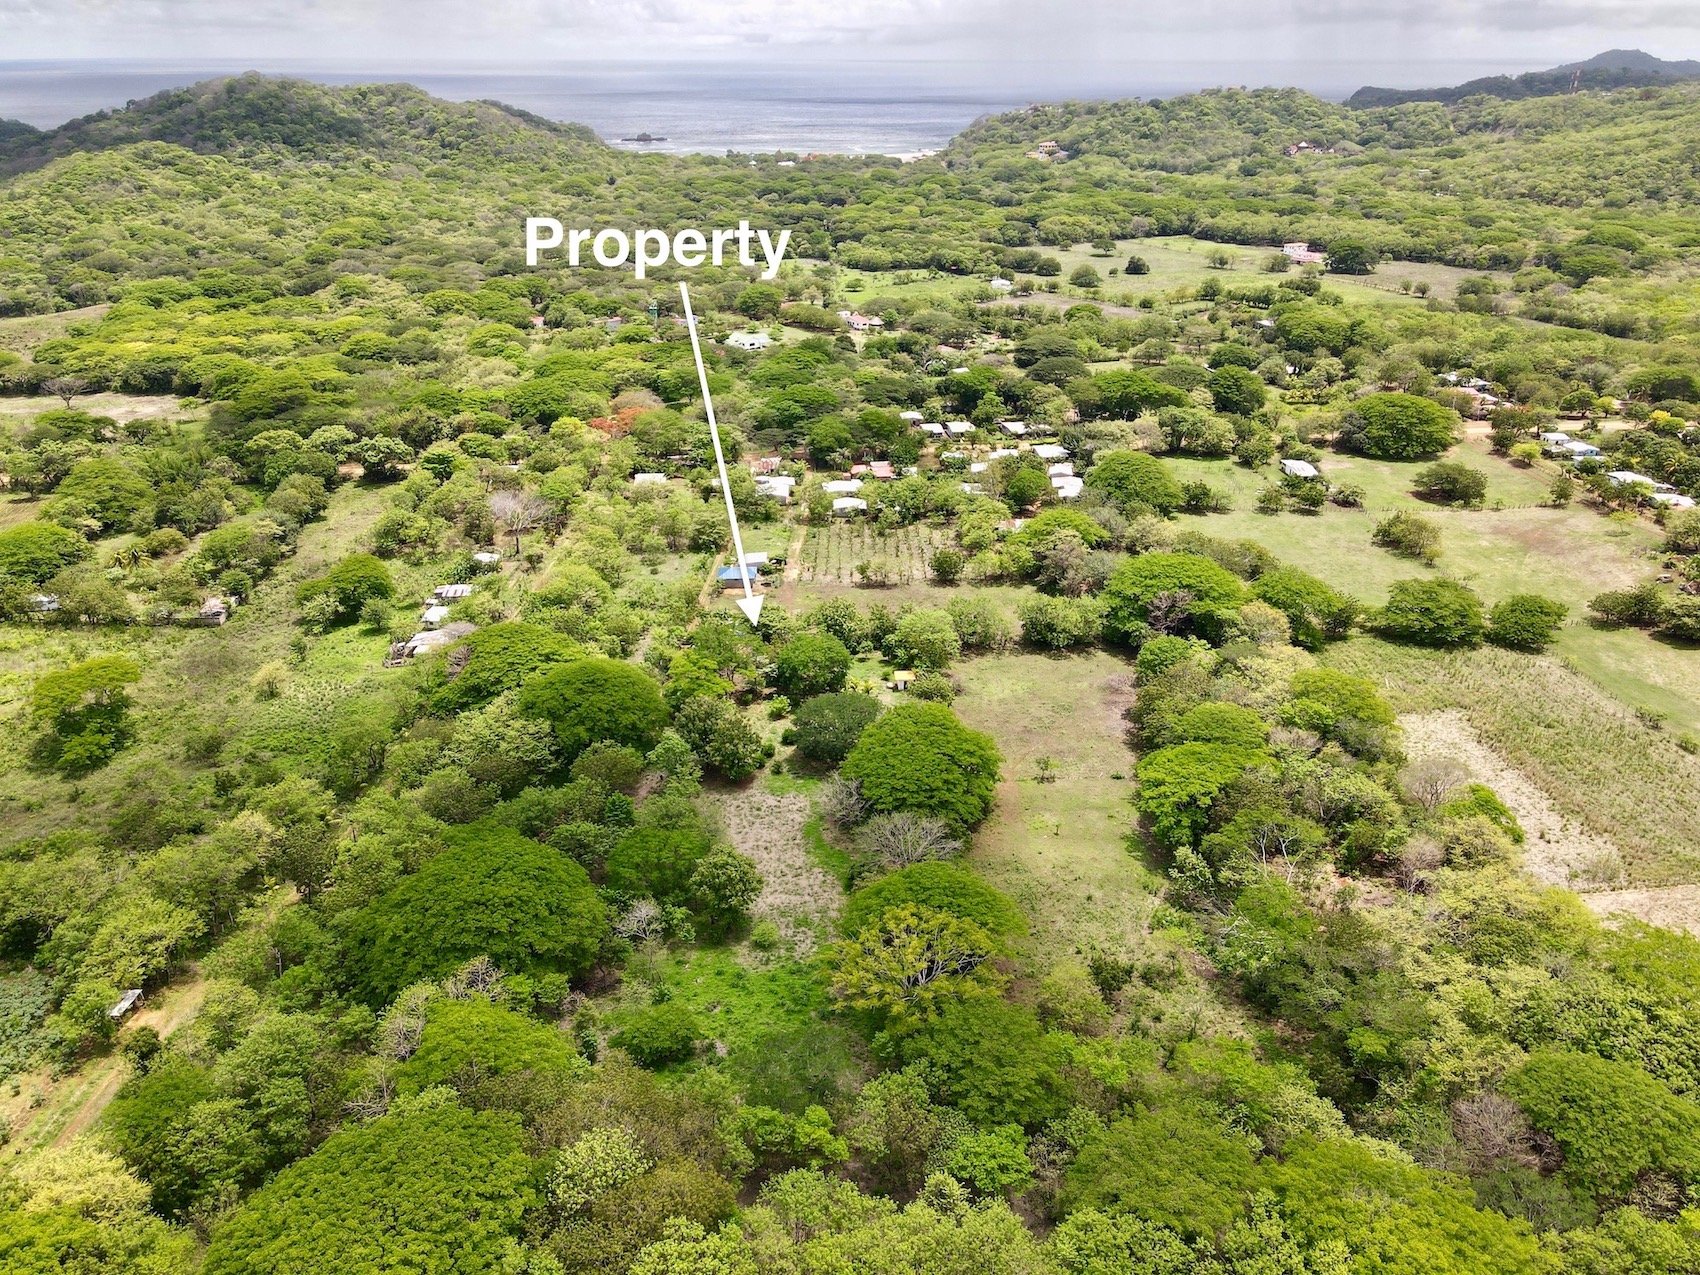 Acreage For Sale Nicaragua 2022 Property Real Estate 15.jpg